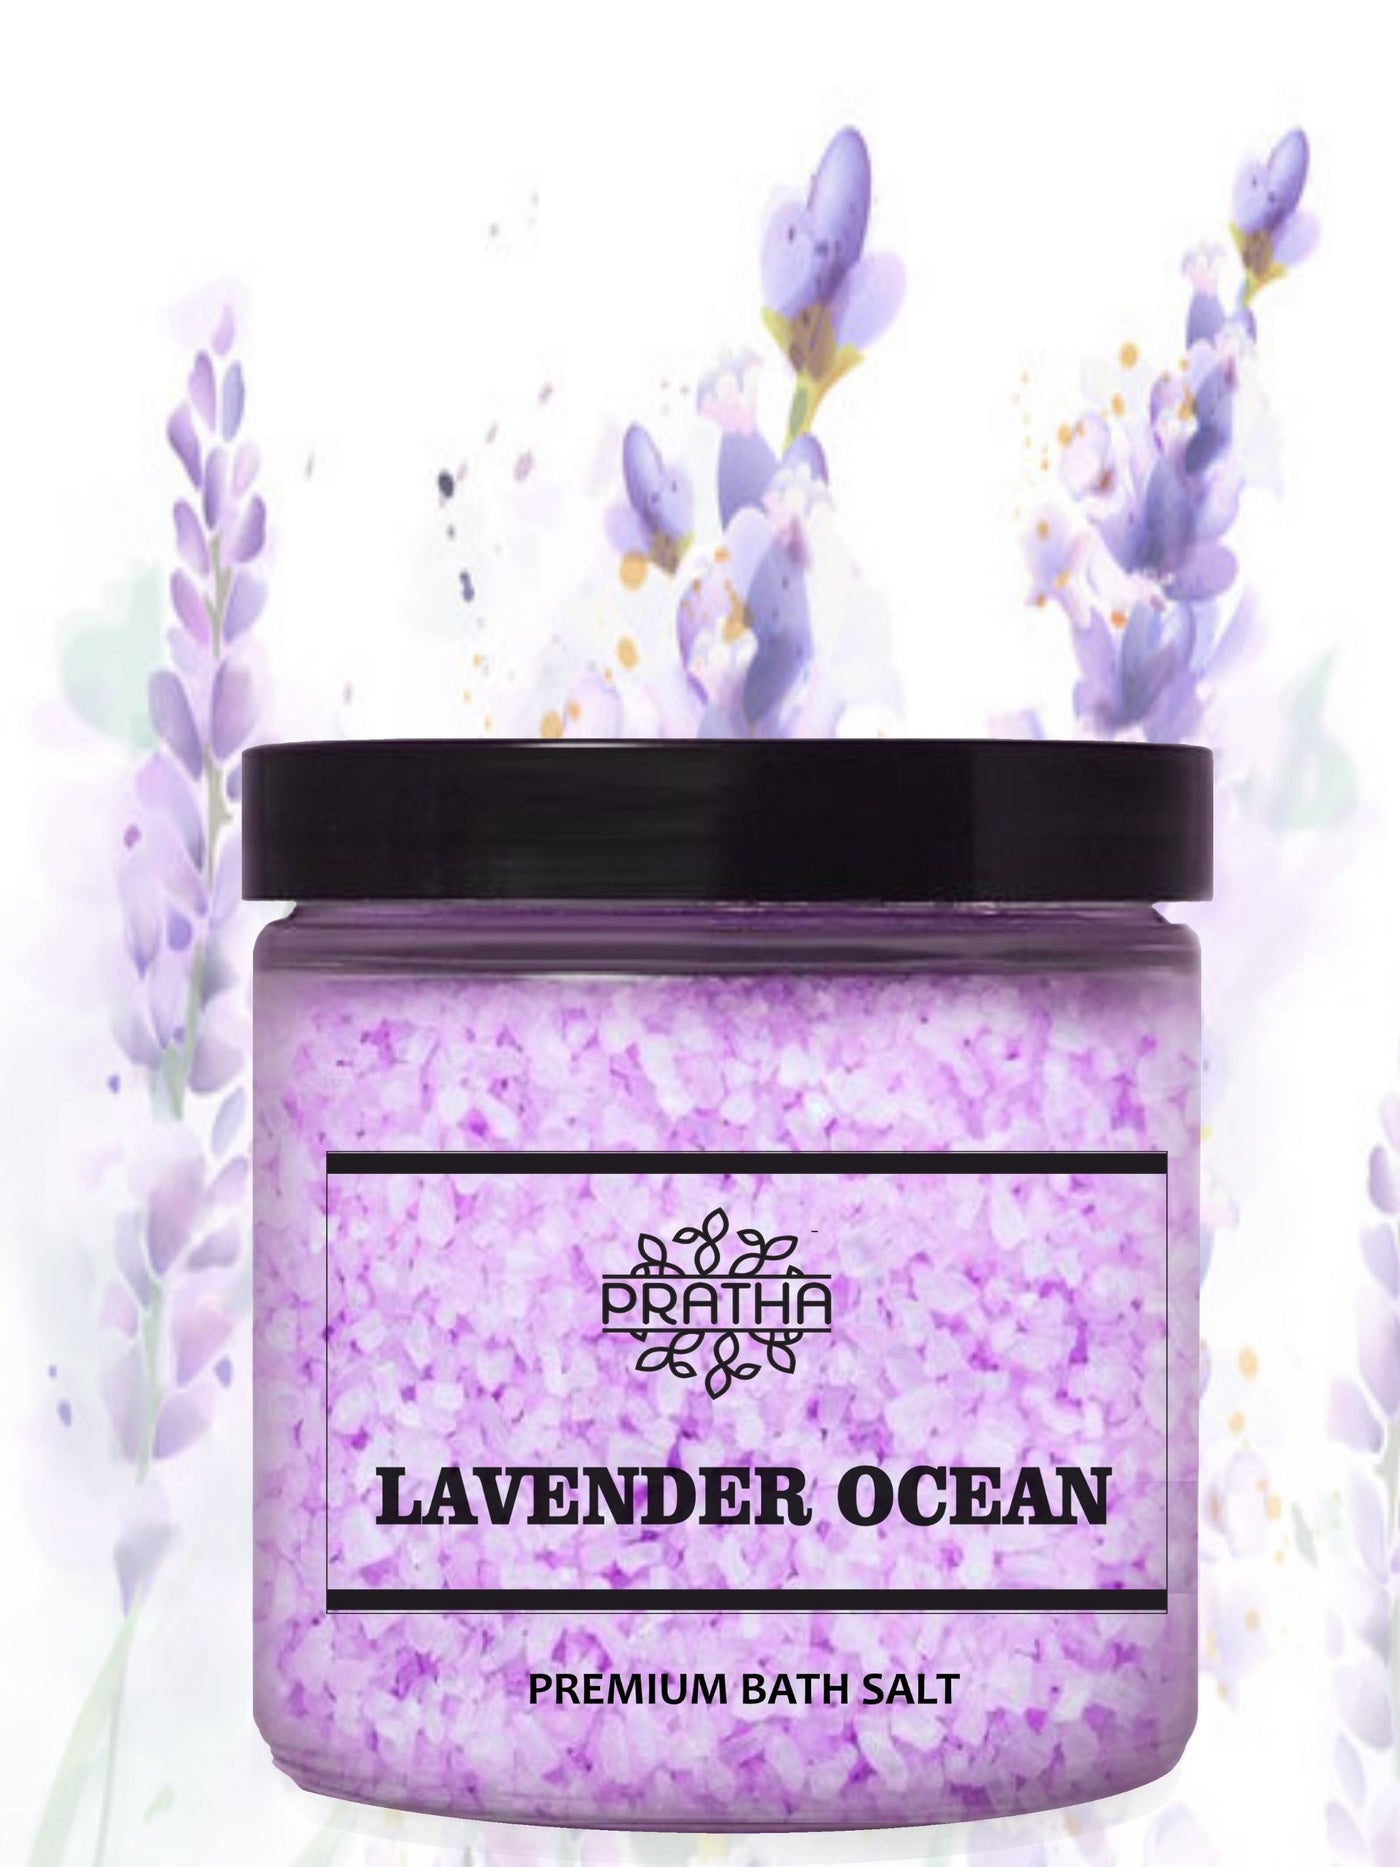 Lavender Ocean Bath Salt - View 3